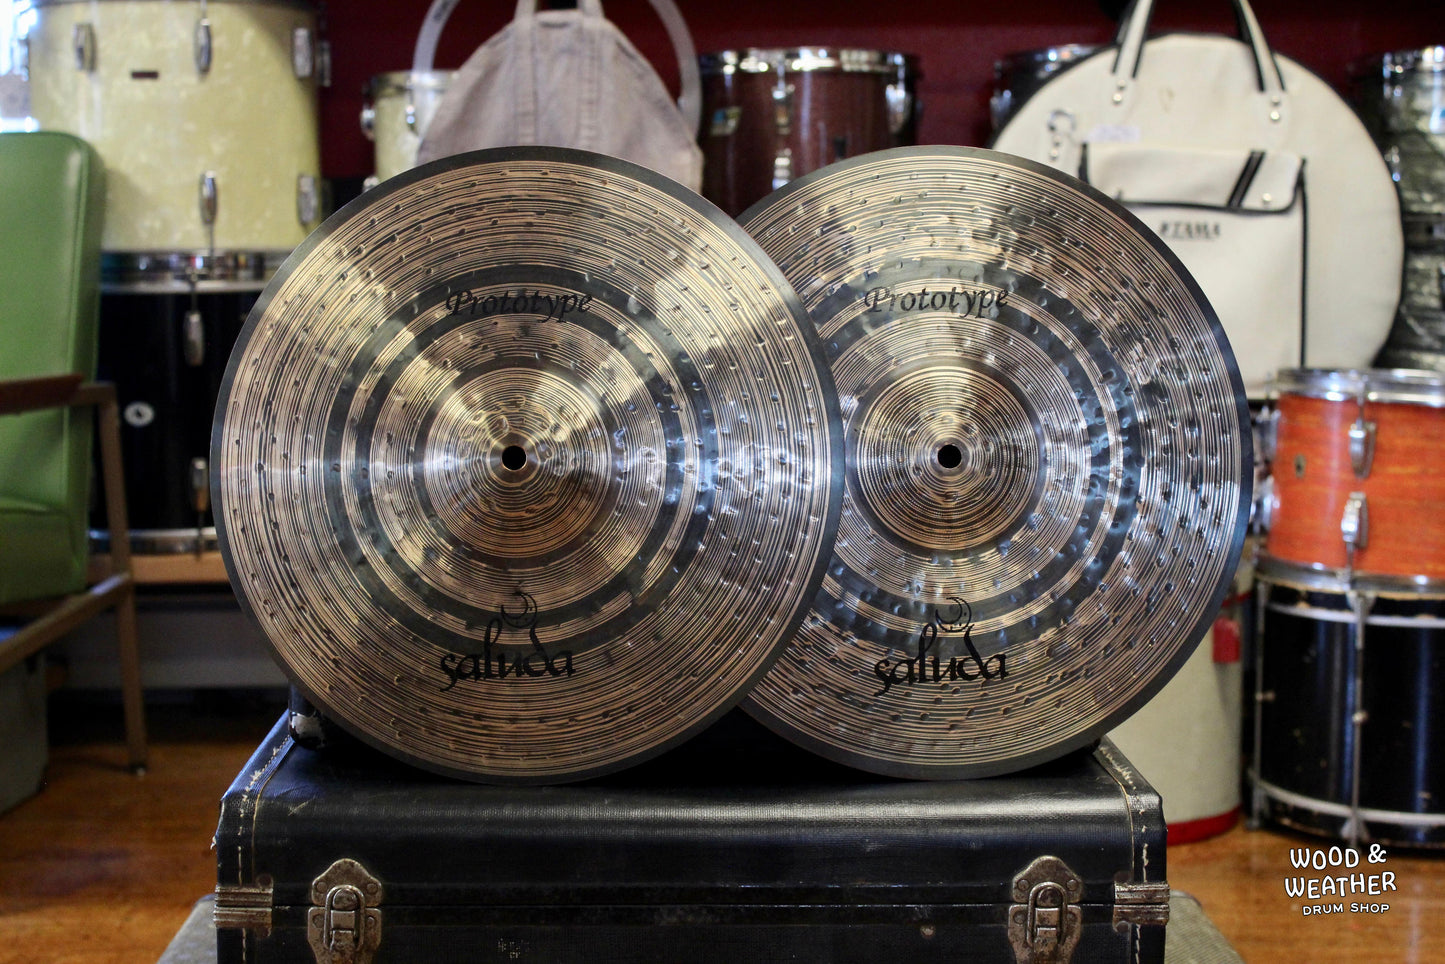 Used Saluda 14" Prototype Hi-Hat Cymbals 845/845g